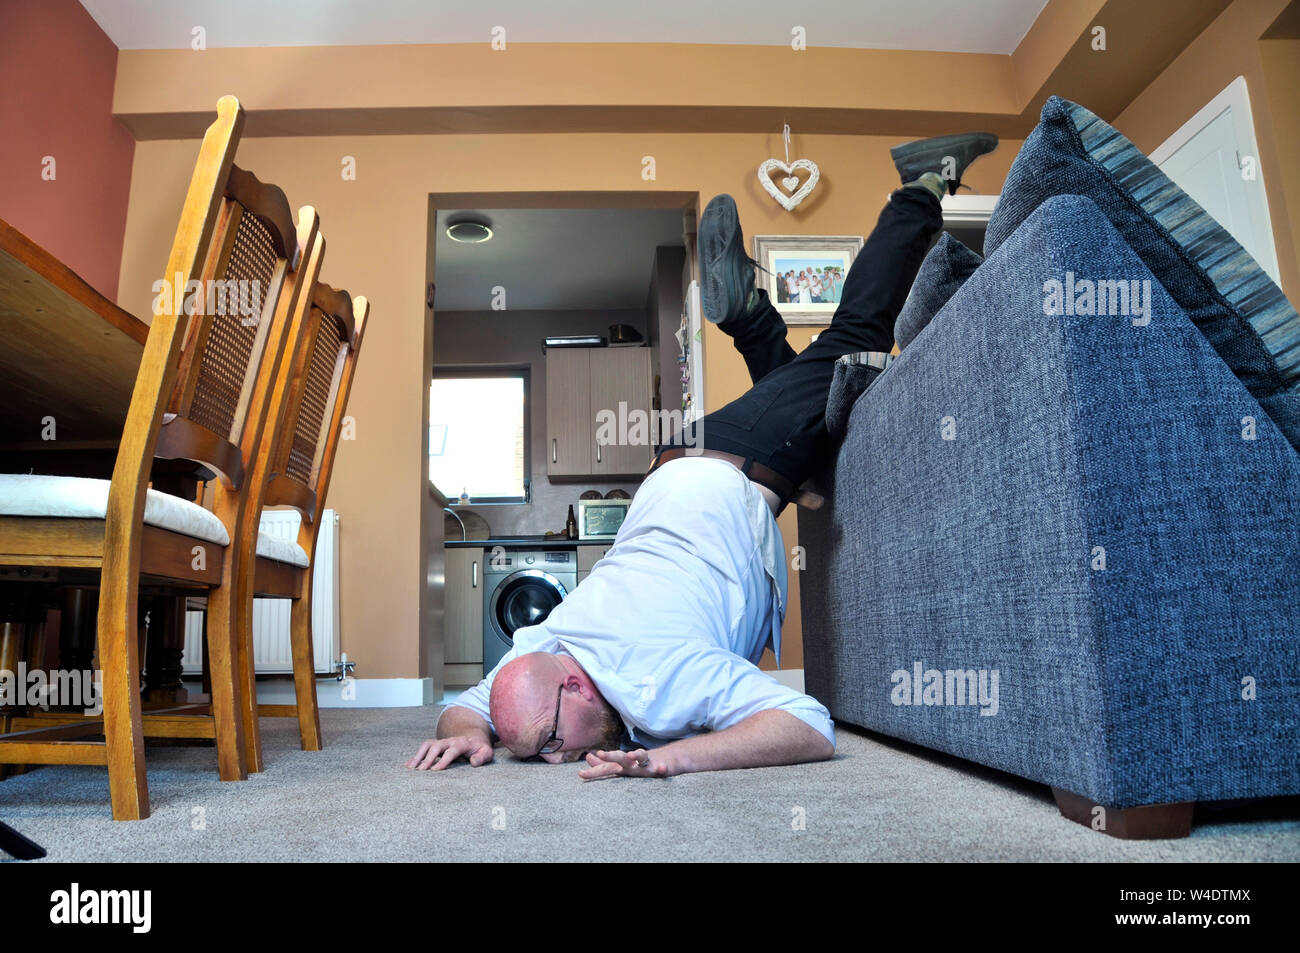 man falling over sofa Stock Photo